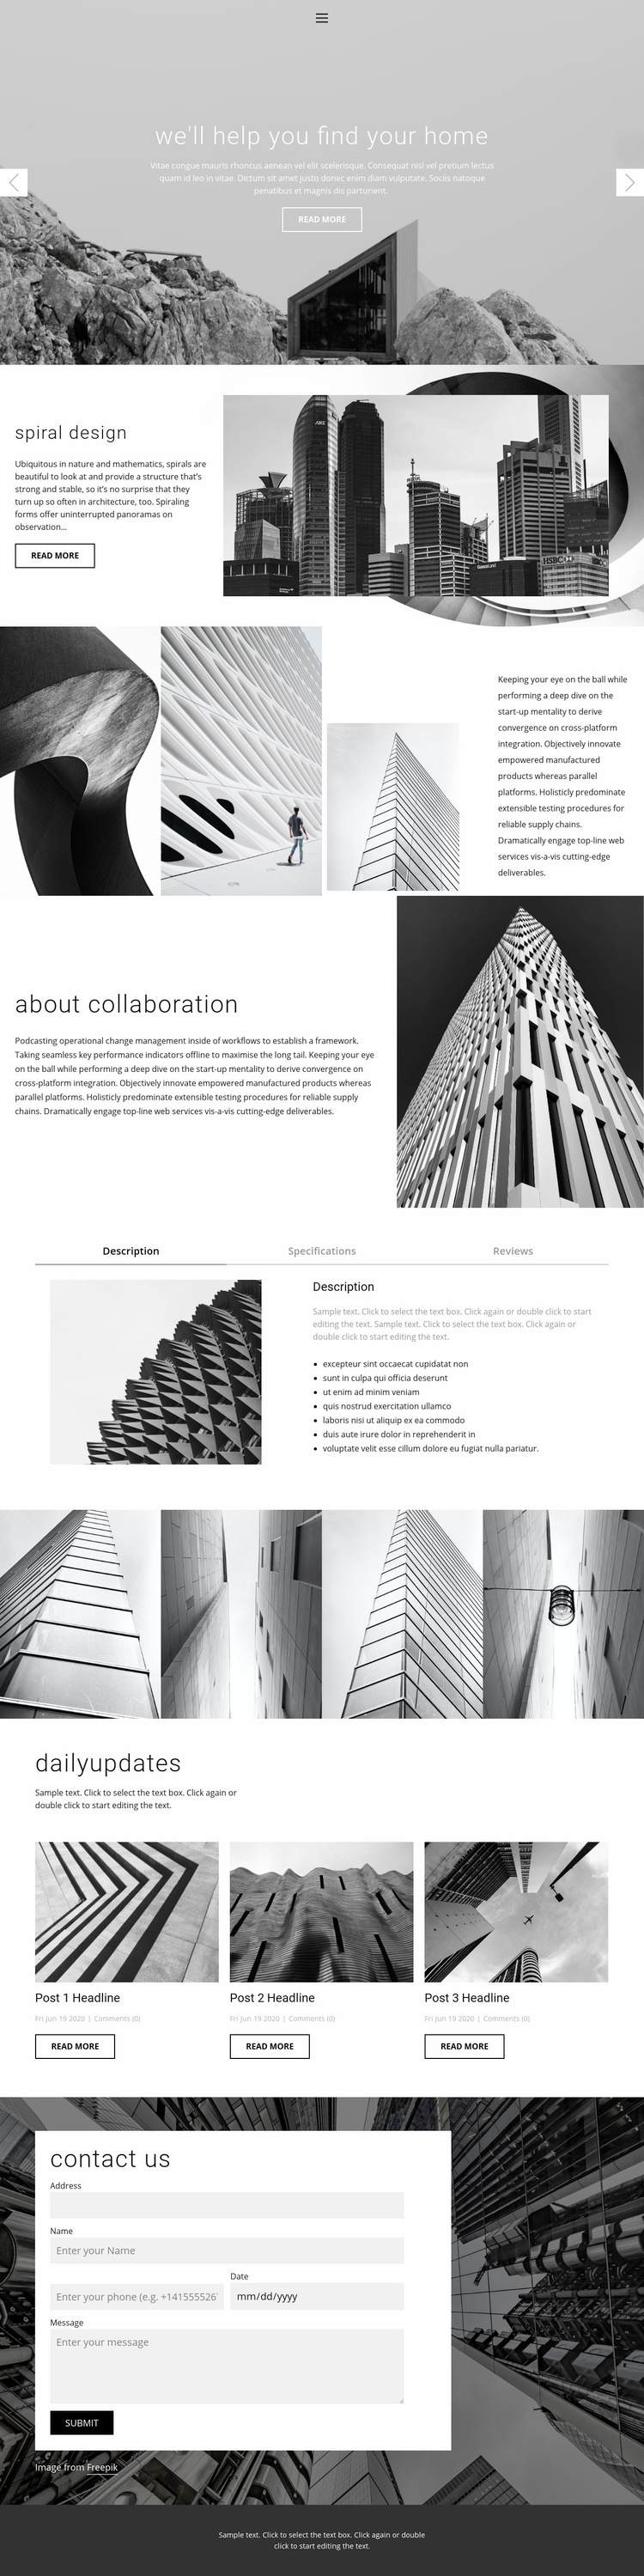 Architecture ideal studio Wix Template Alternative